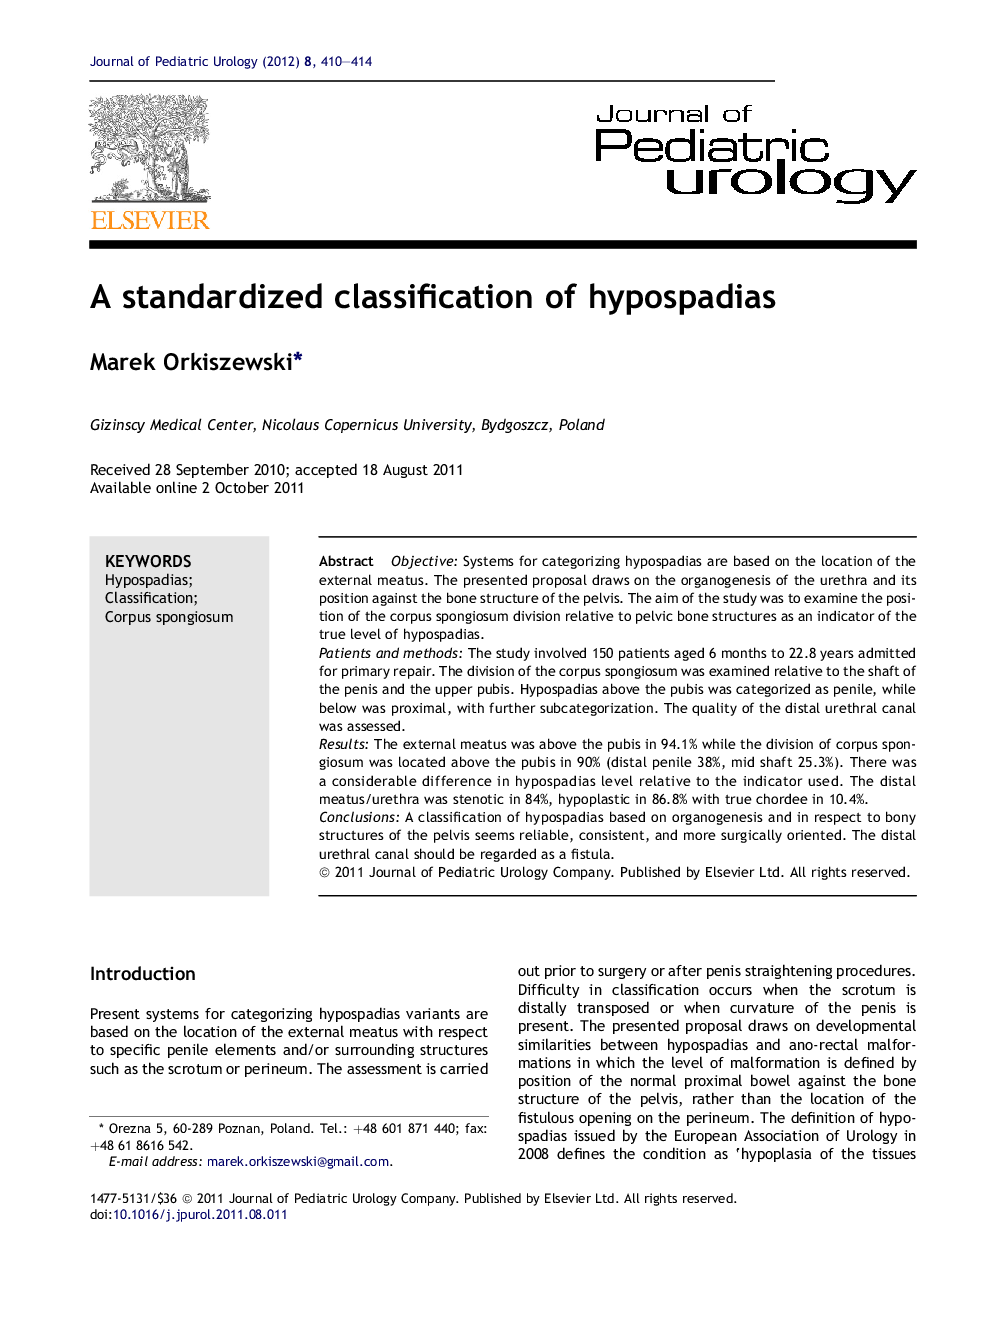 A standardized classification of hypospadias